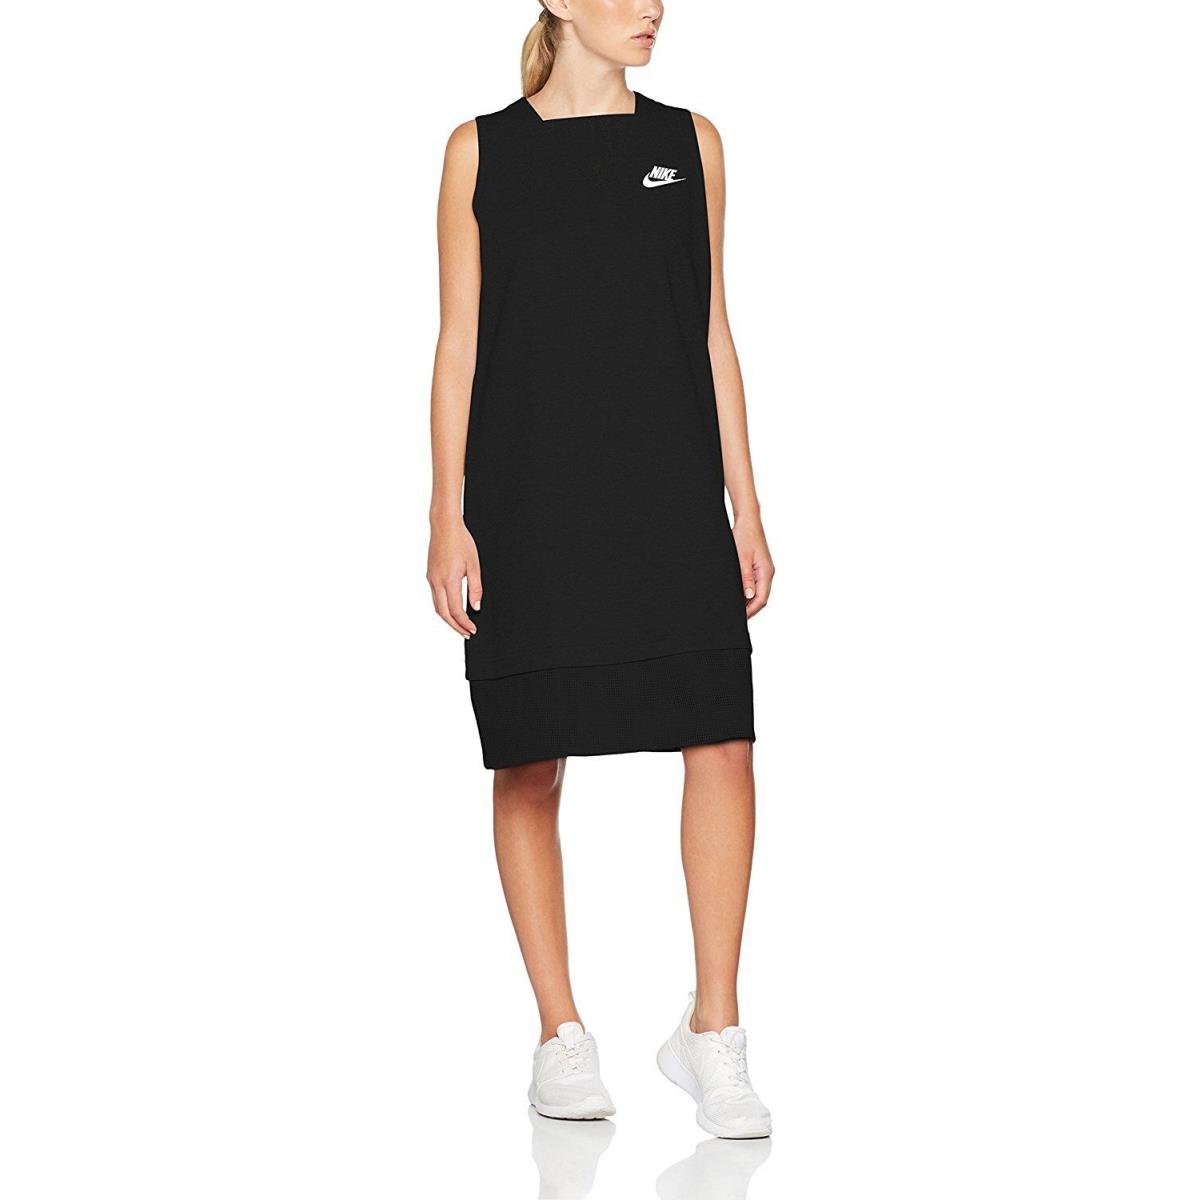 Nike Girls Youth Tech Pack Black Dress 848192-010/Youth Large